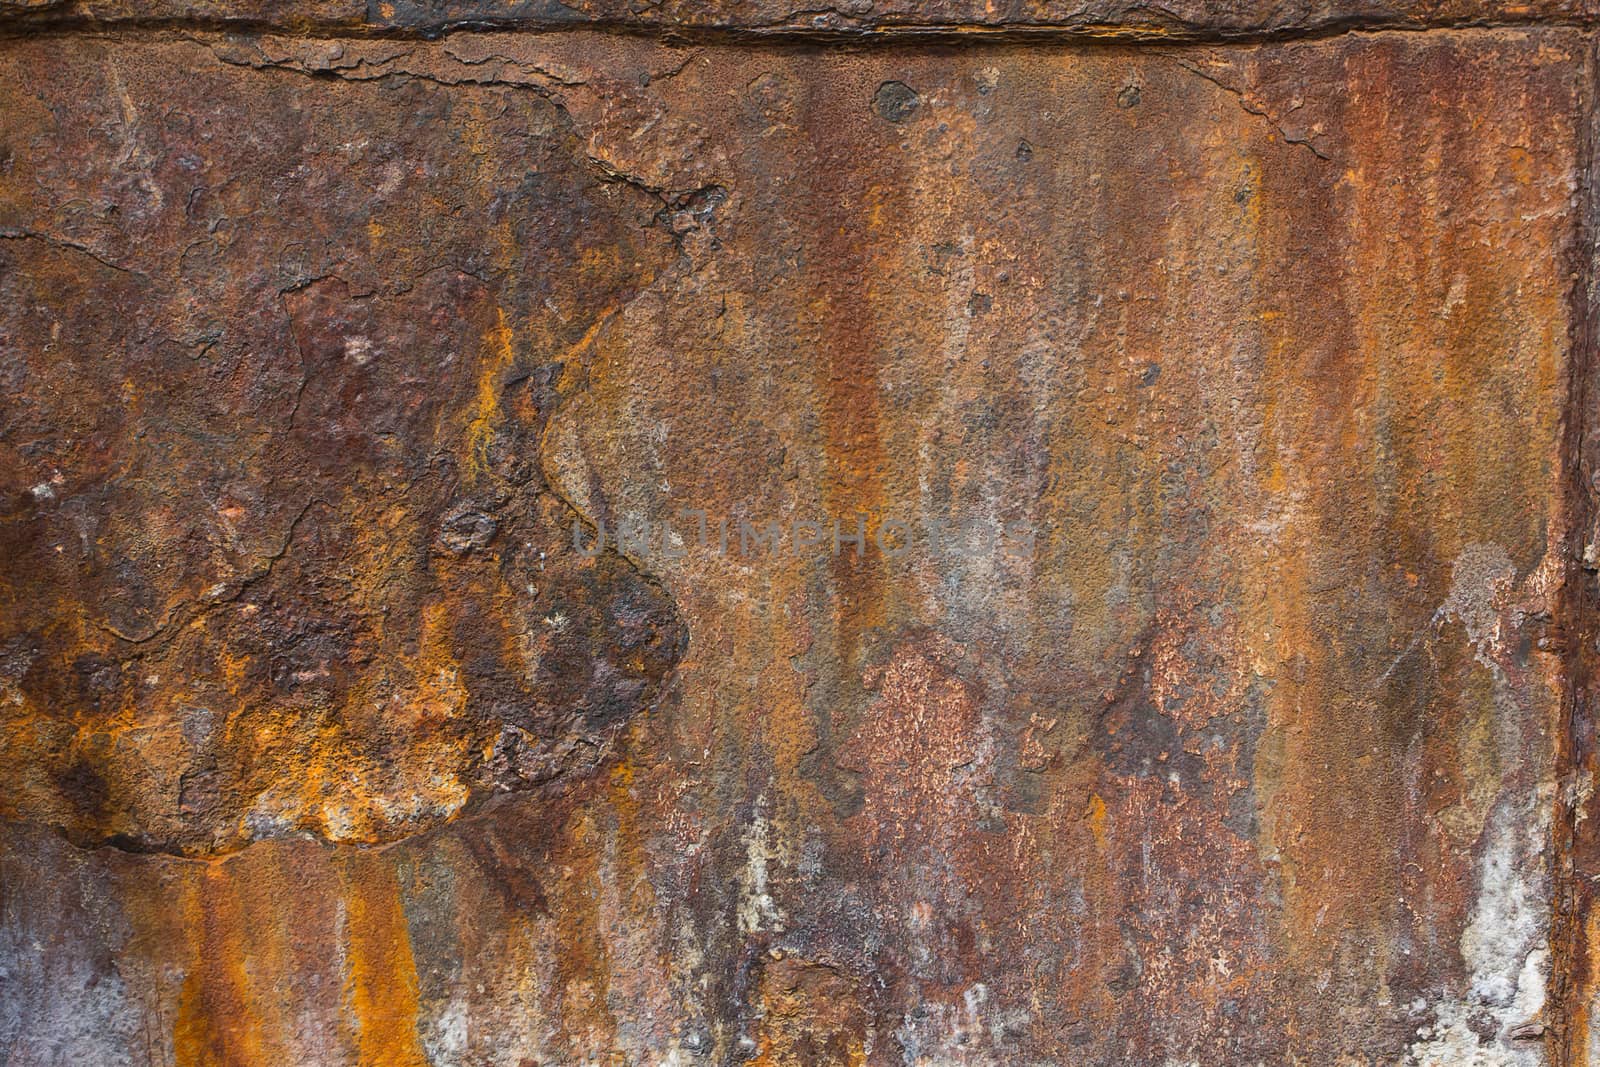 Grunge iron rust texture by wyoosumran